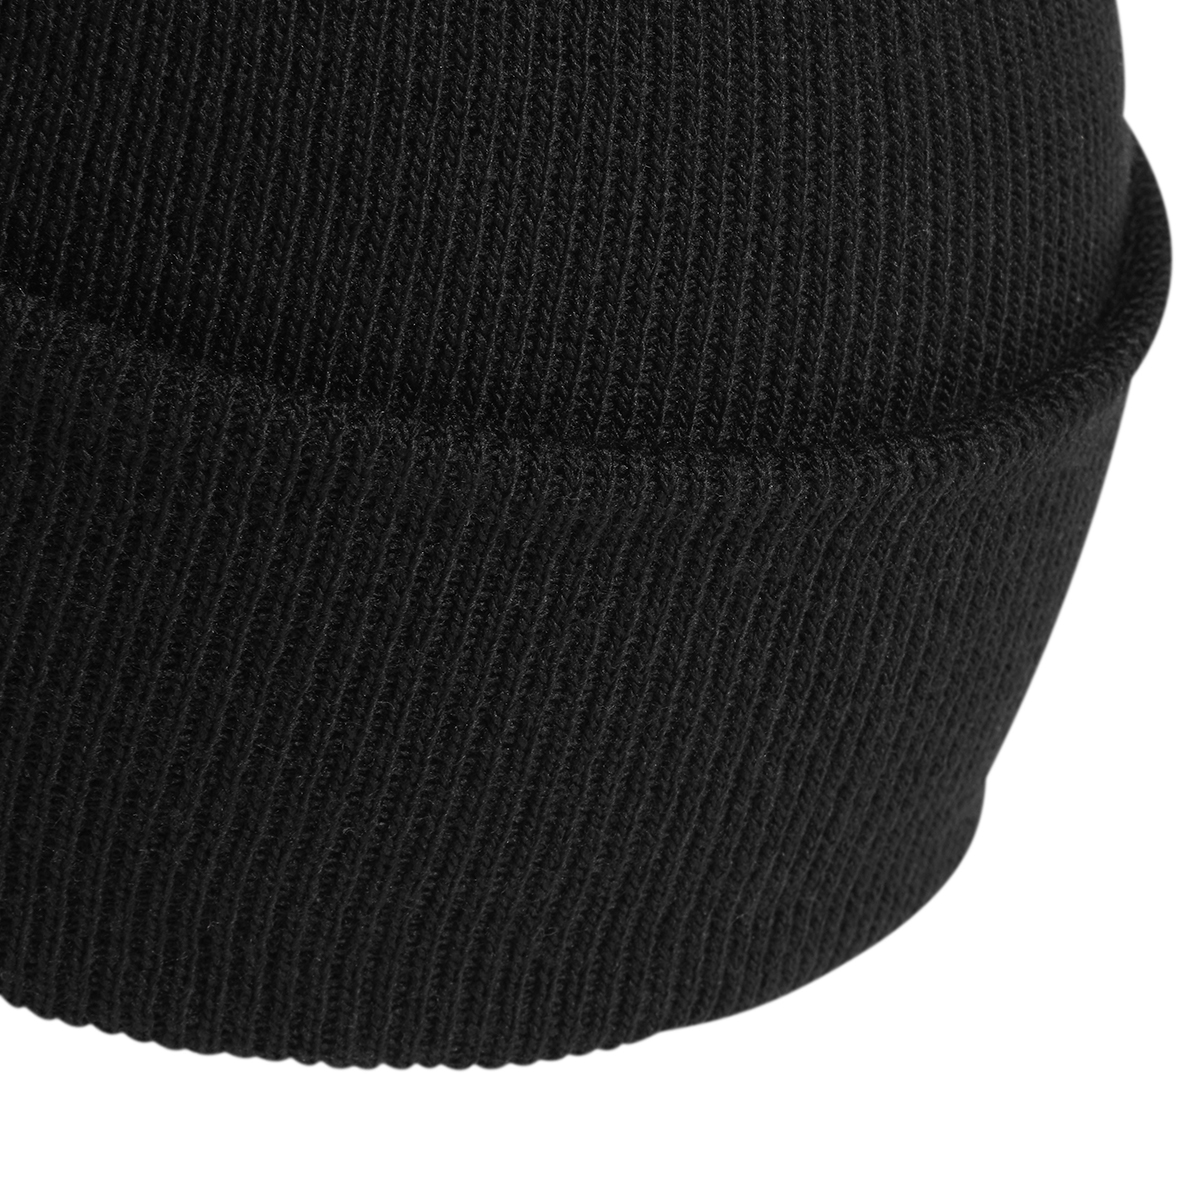 Adicolor Cuff Knit Beanie - Black